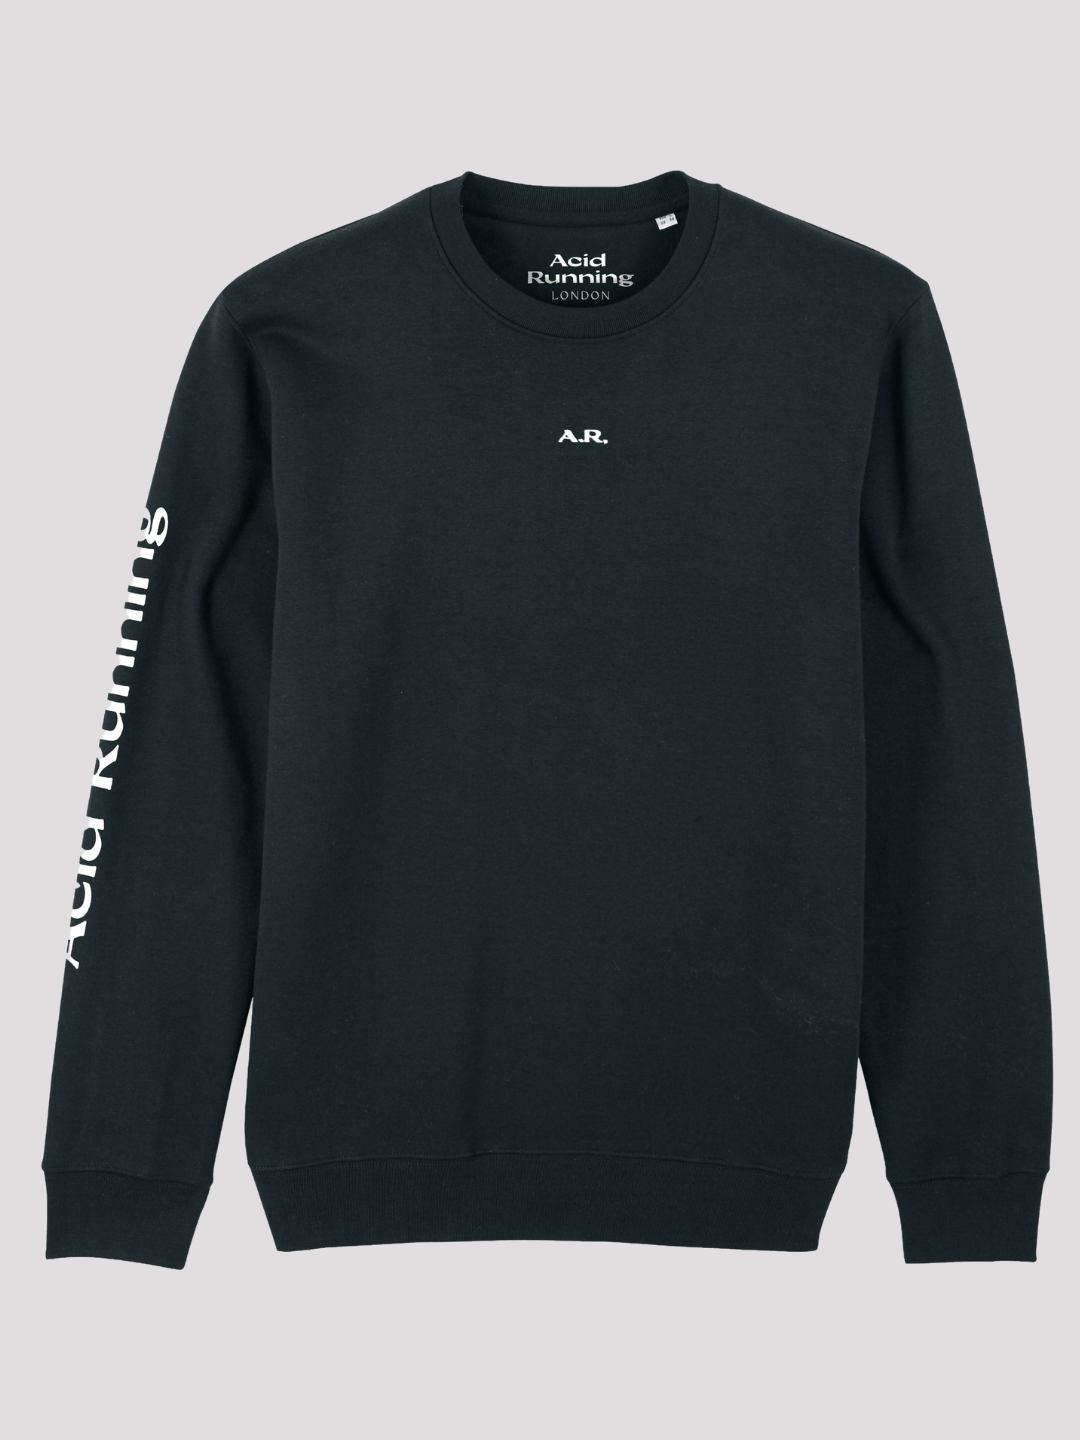 Design Notes: Luxury Pace Sweatshirt